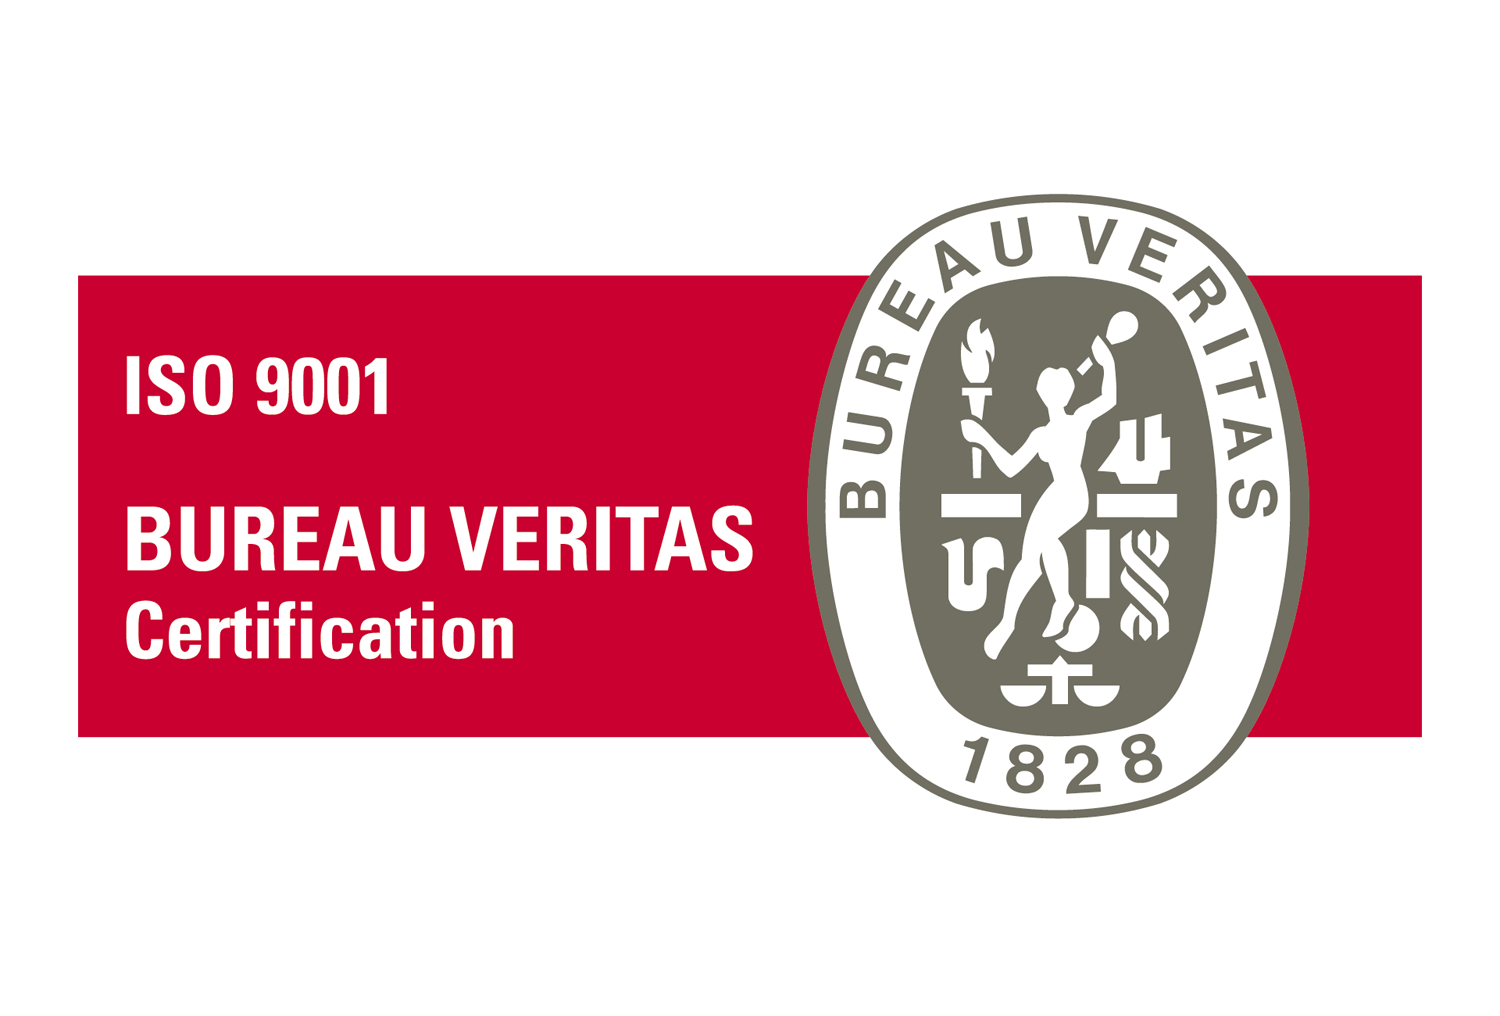 Veritas Logo - Bureau Veritas ISO 9001 logo